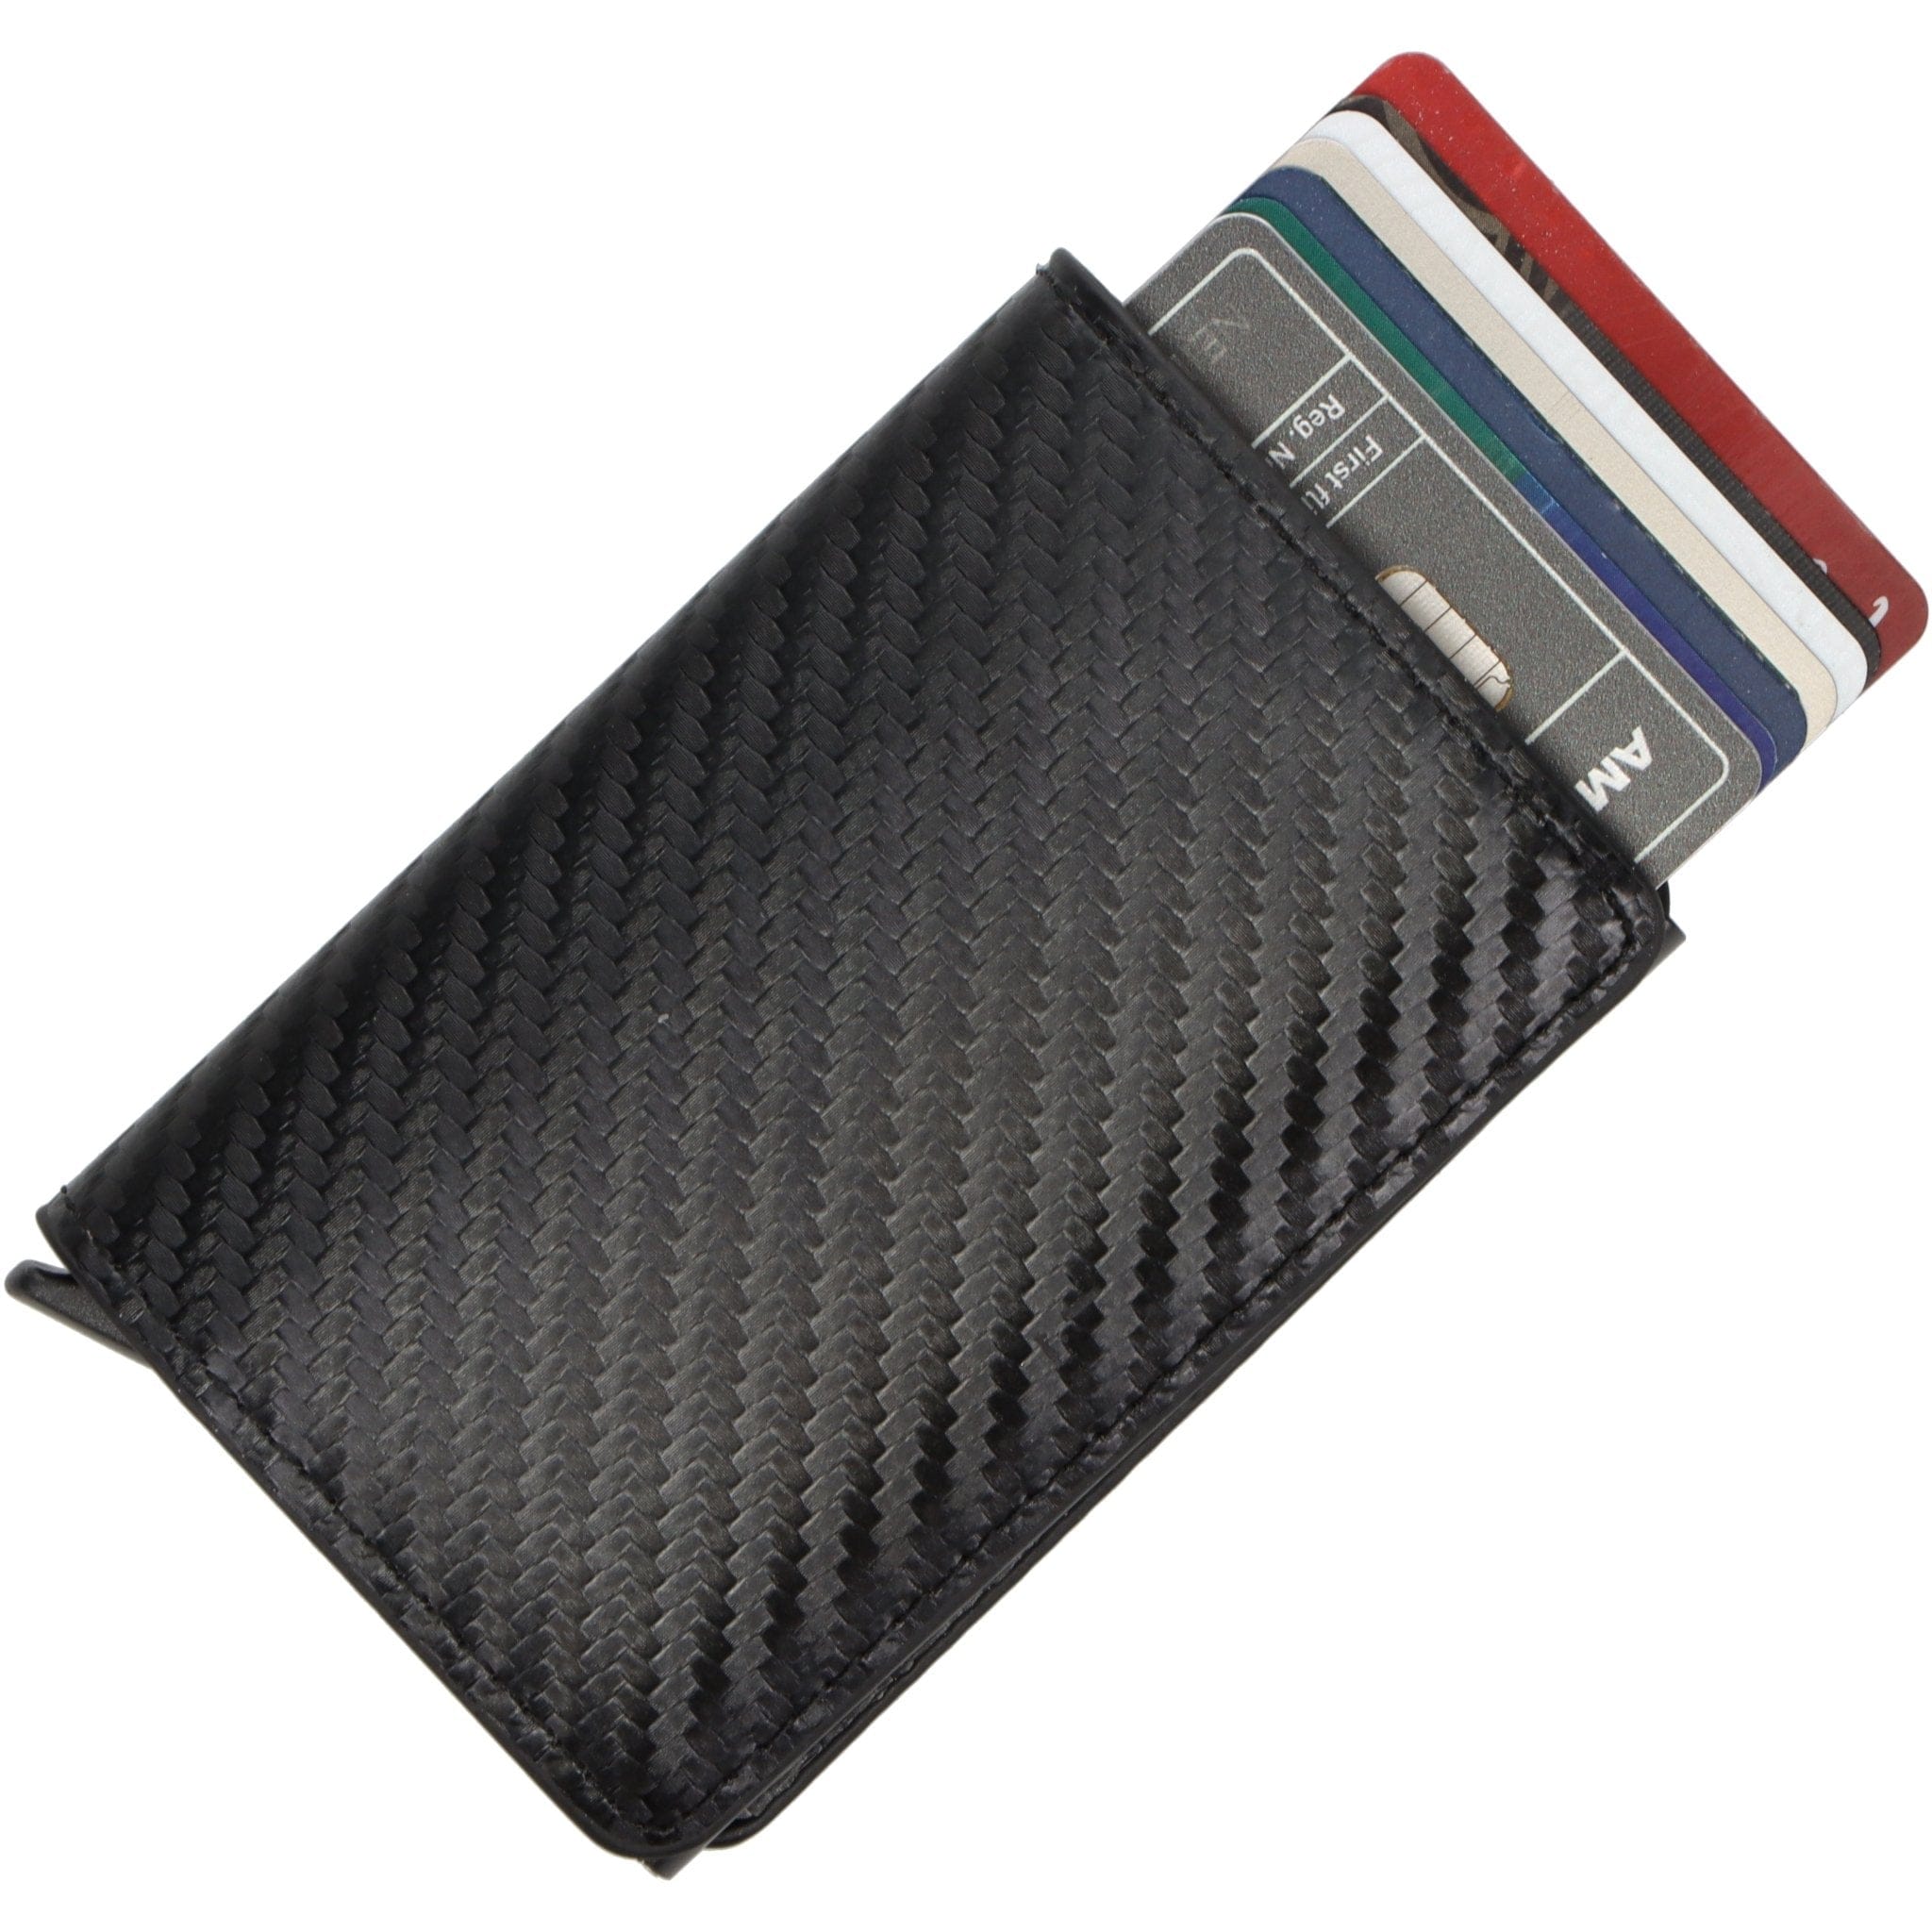 Pilot Black Leather Wallet Business Card Holder (Single Pop-up Card Case Wallet) LIQUIDATION PRICING